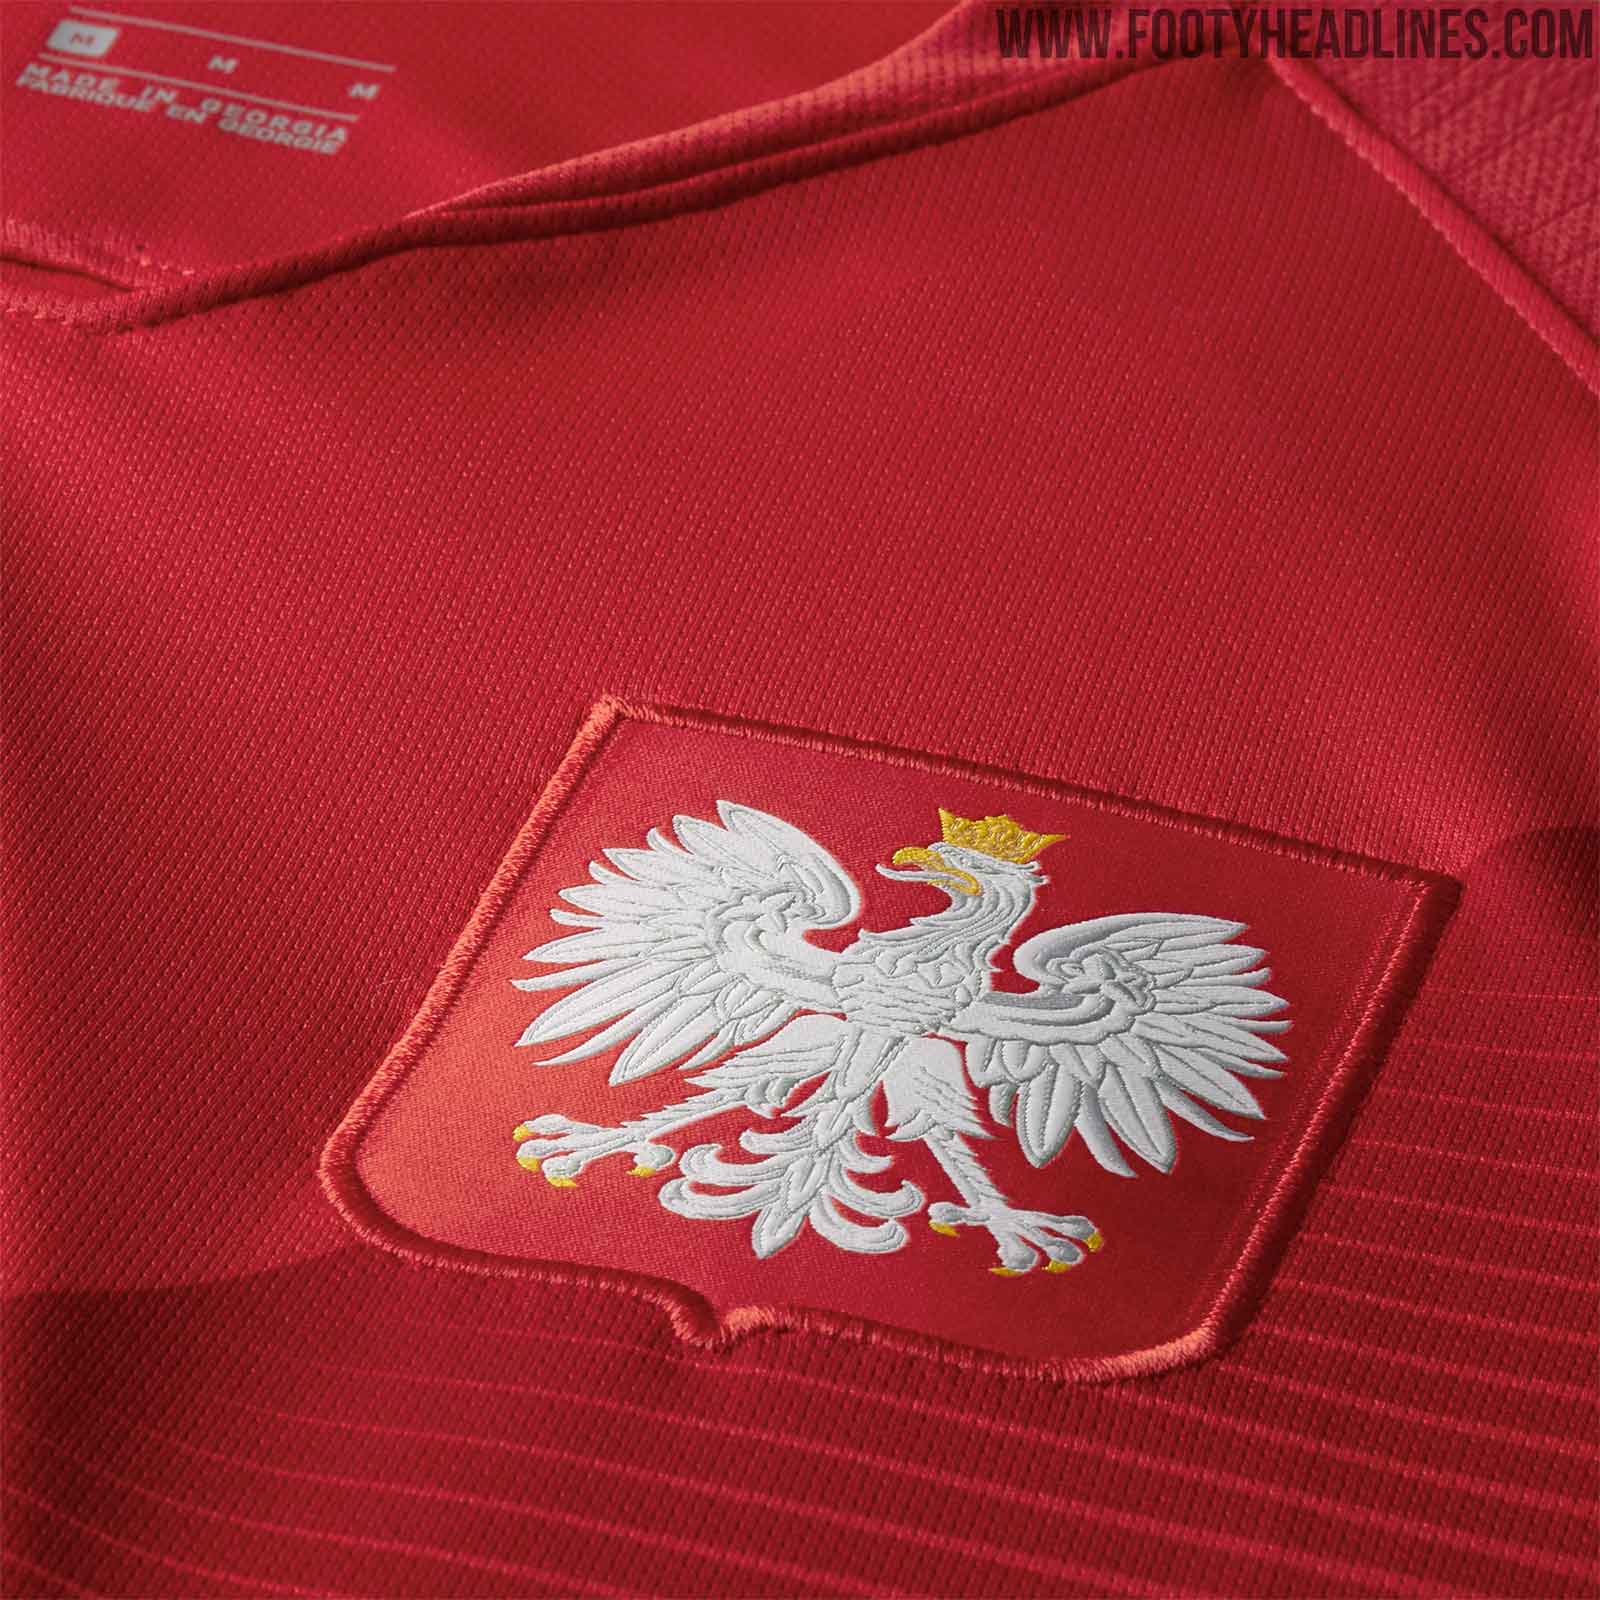 poland-2018-world-cup-home-away-kits-4.jpg